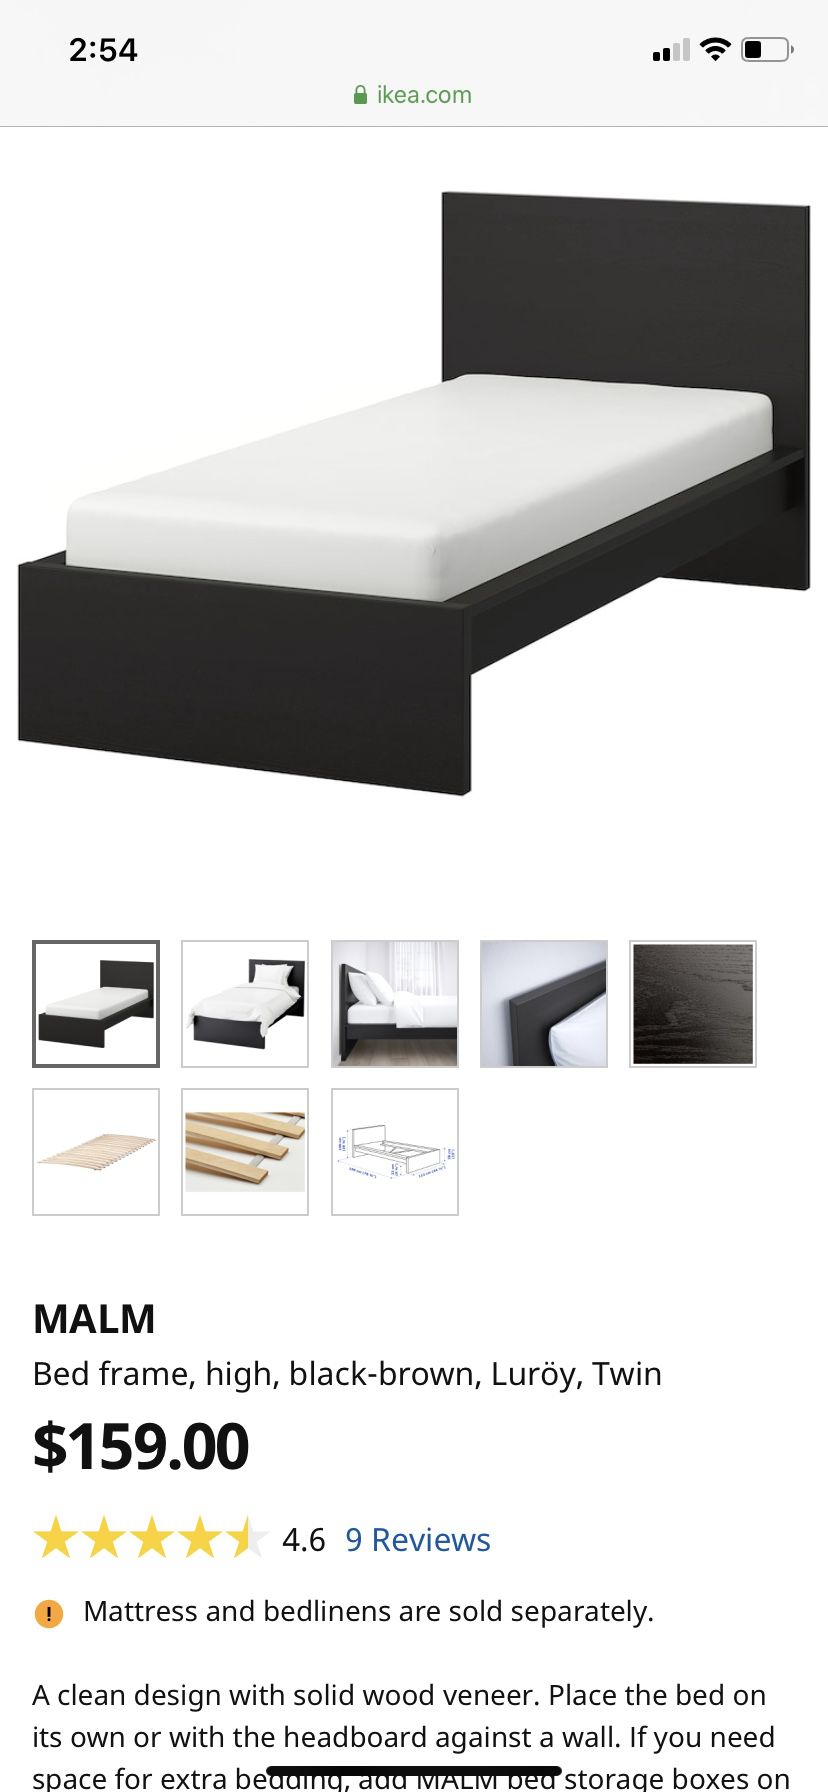 Twin bed gently used-IKEA Malm model